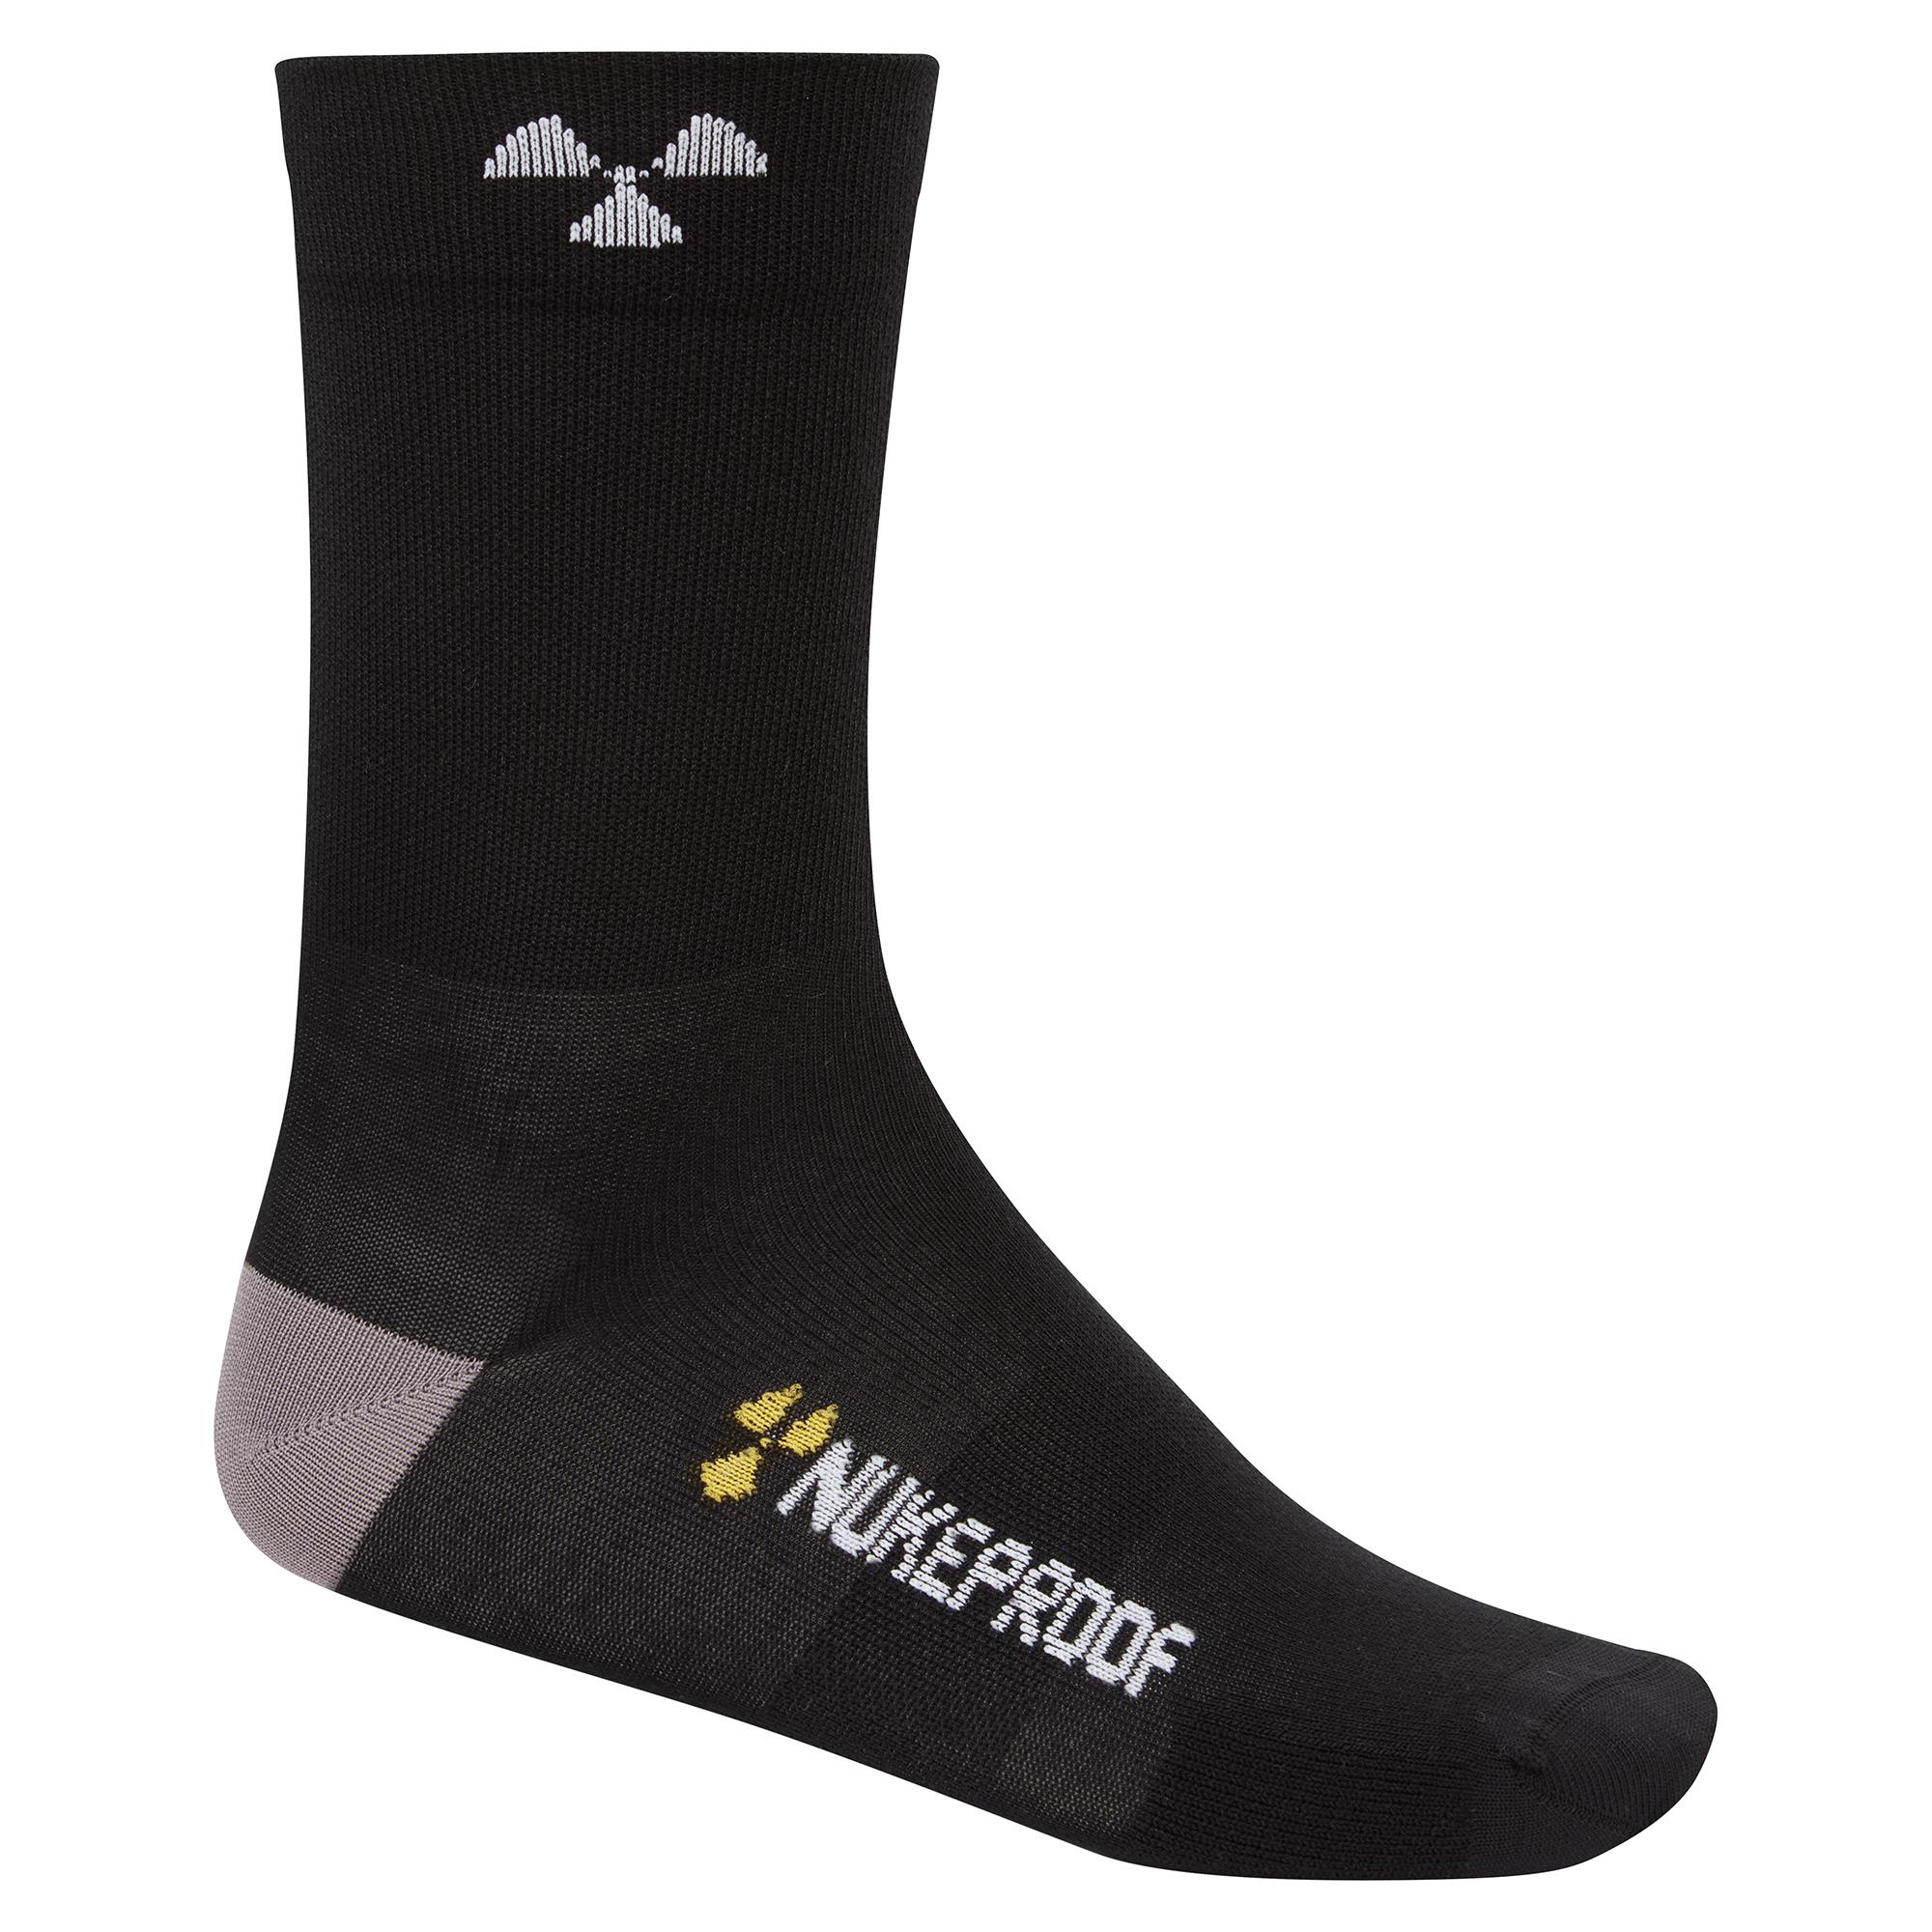 Nukeproof Outland Sock  Black/grey